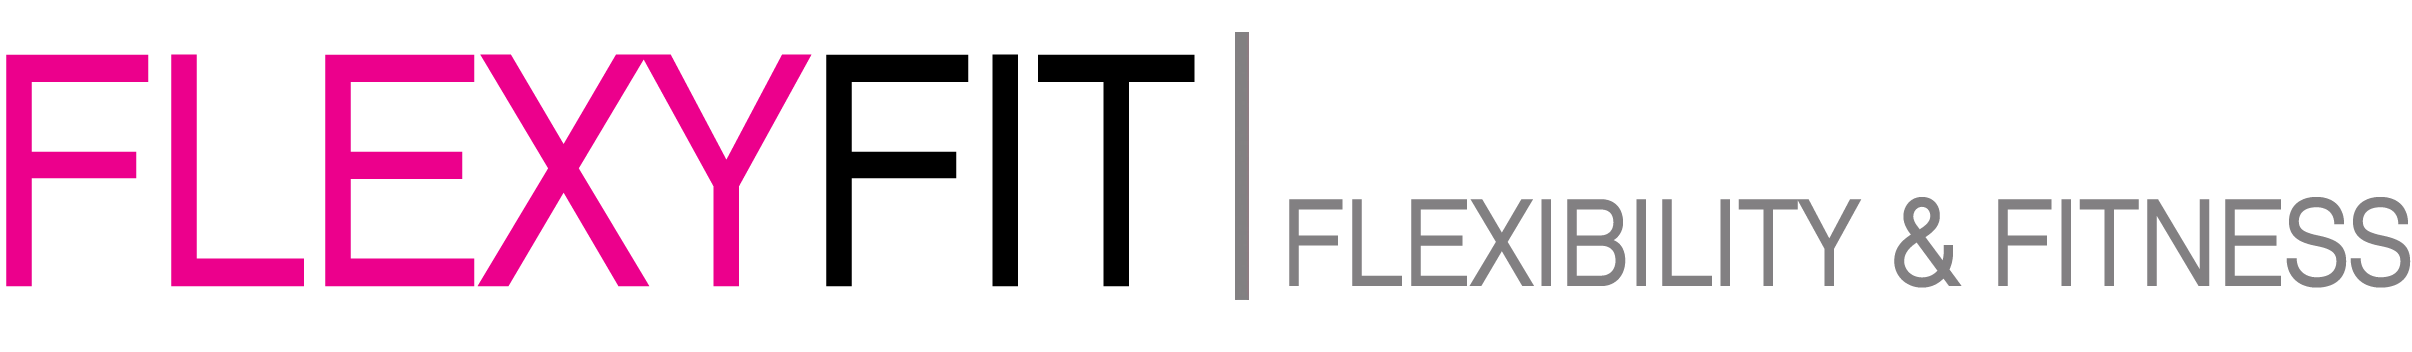 www.flexyfit.co